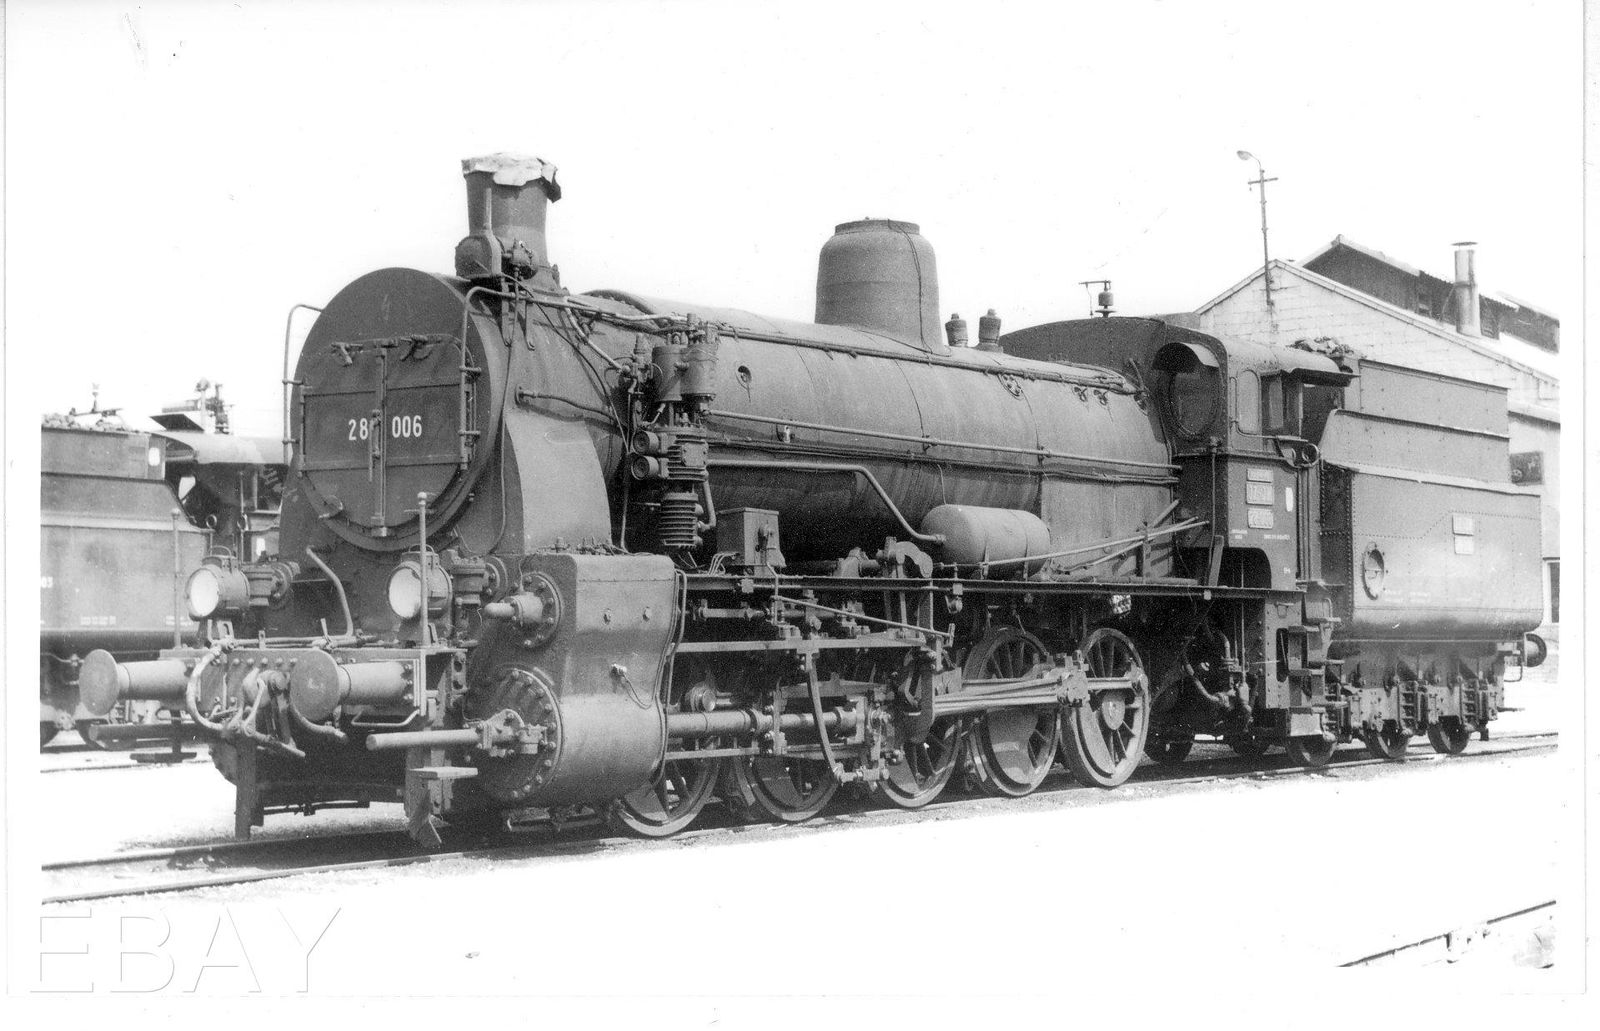 s-l1600 B1 Yugoslav Railway JZ Photograph 28-006 1973.jpg